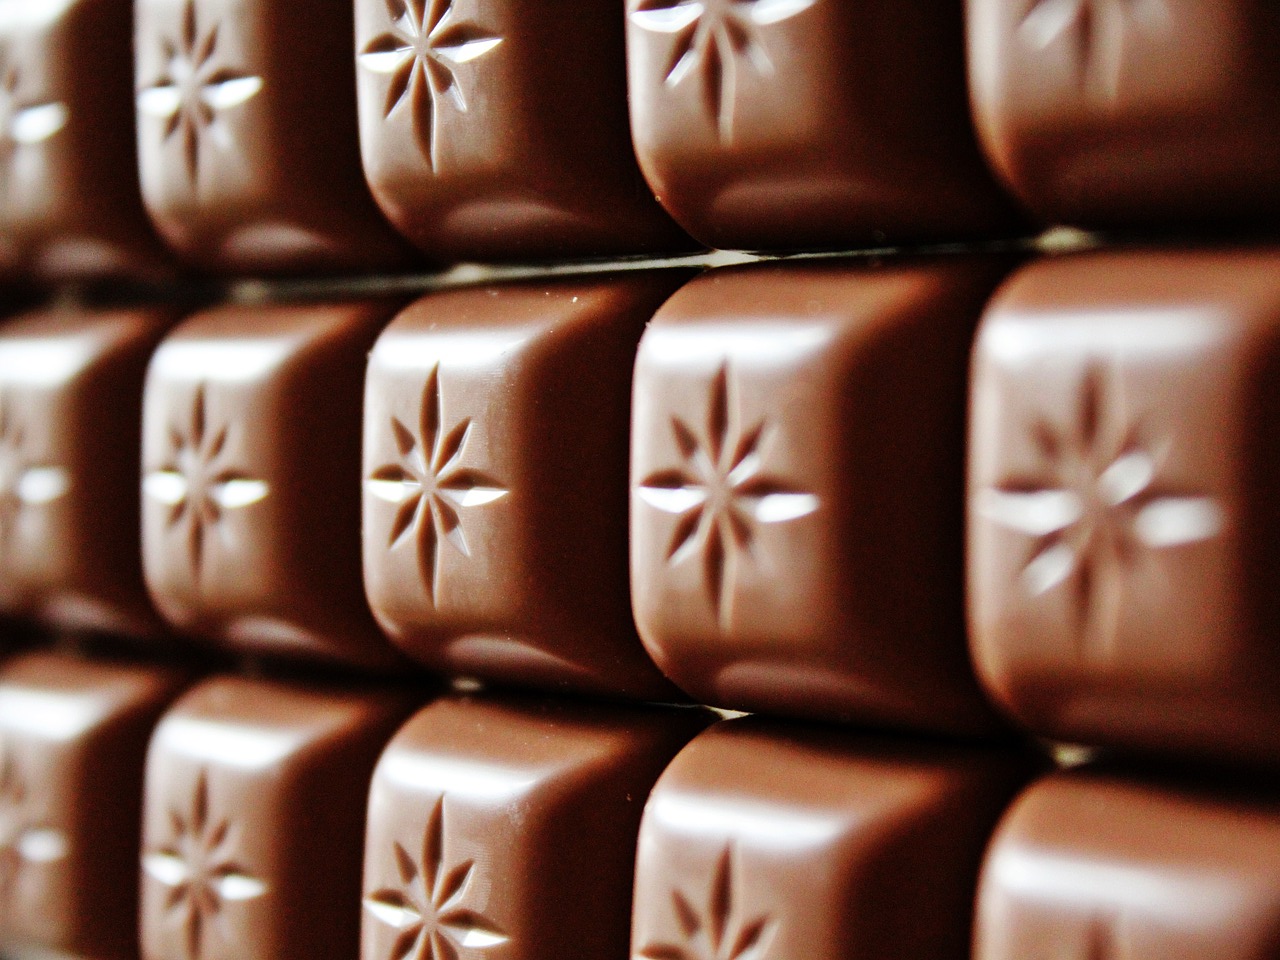 Beneficios del chocolate negro - chocolate con leche con meor proporción de cacao (no negro)